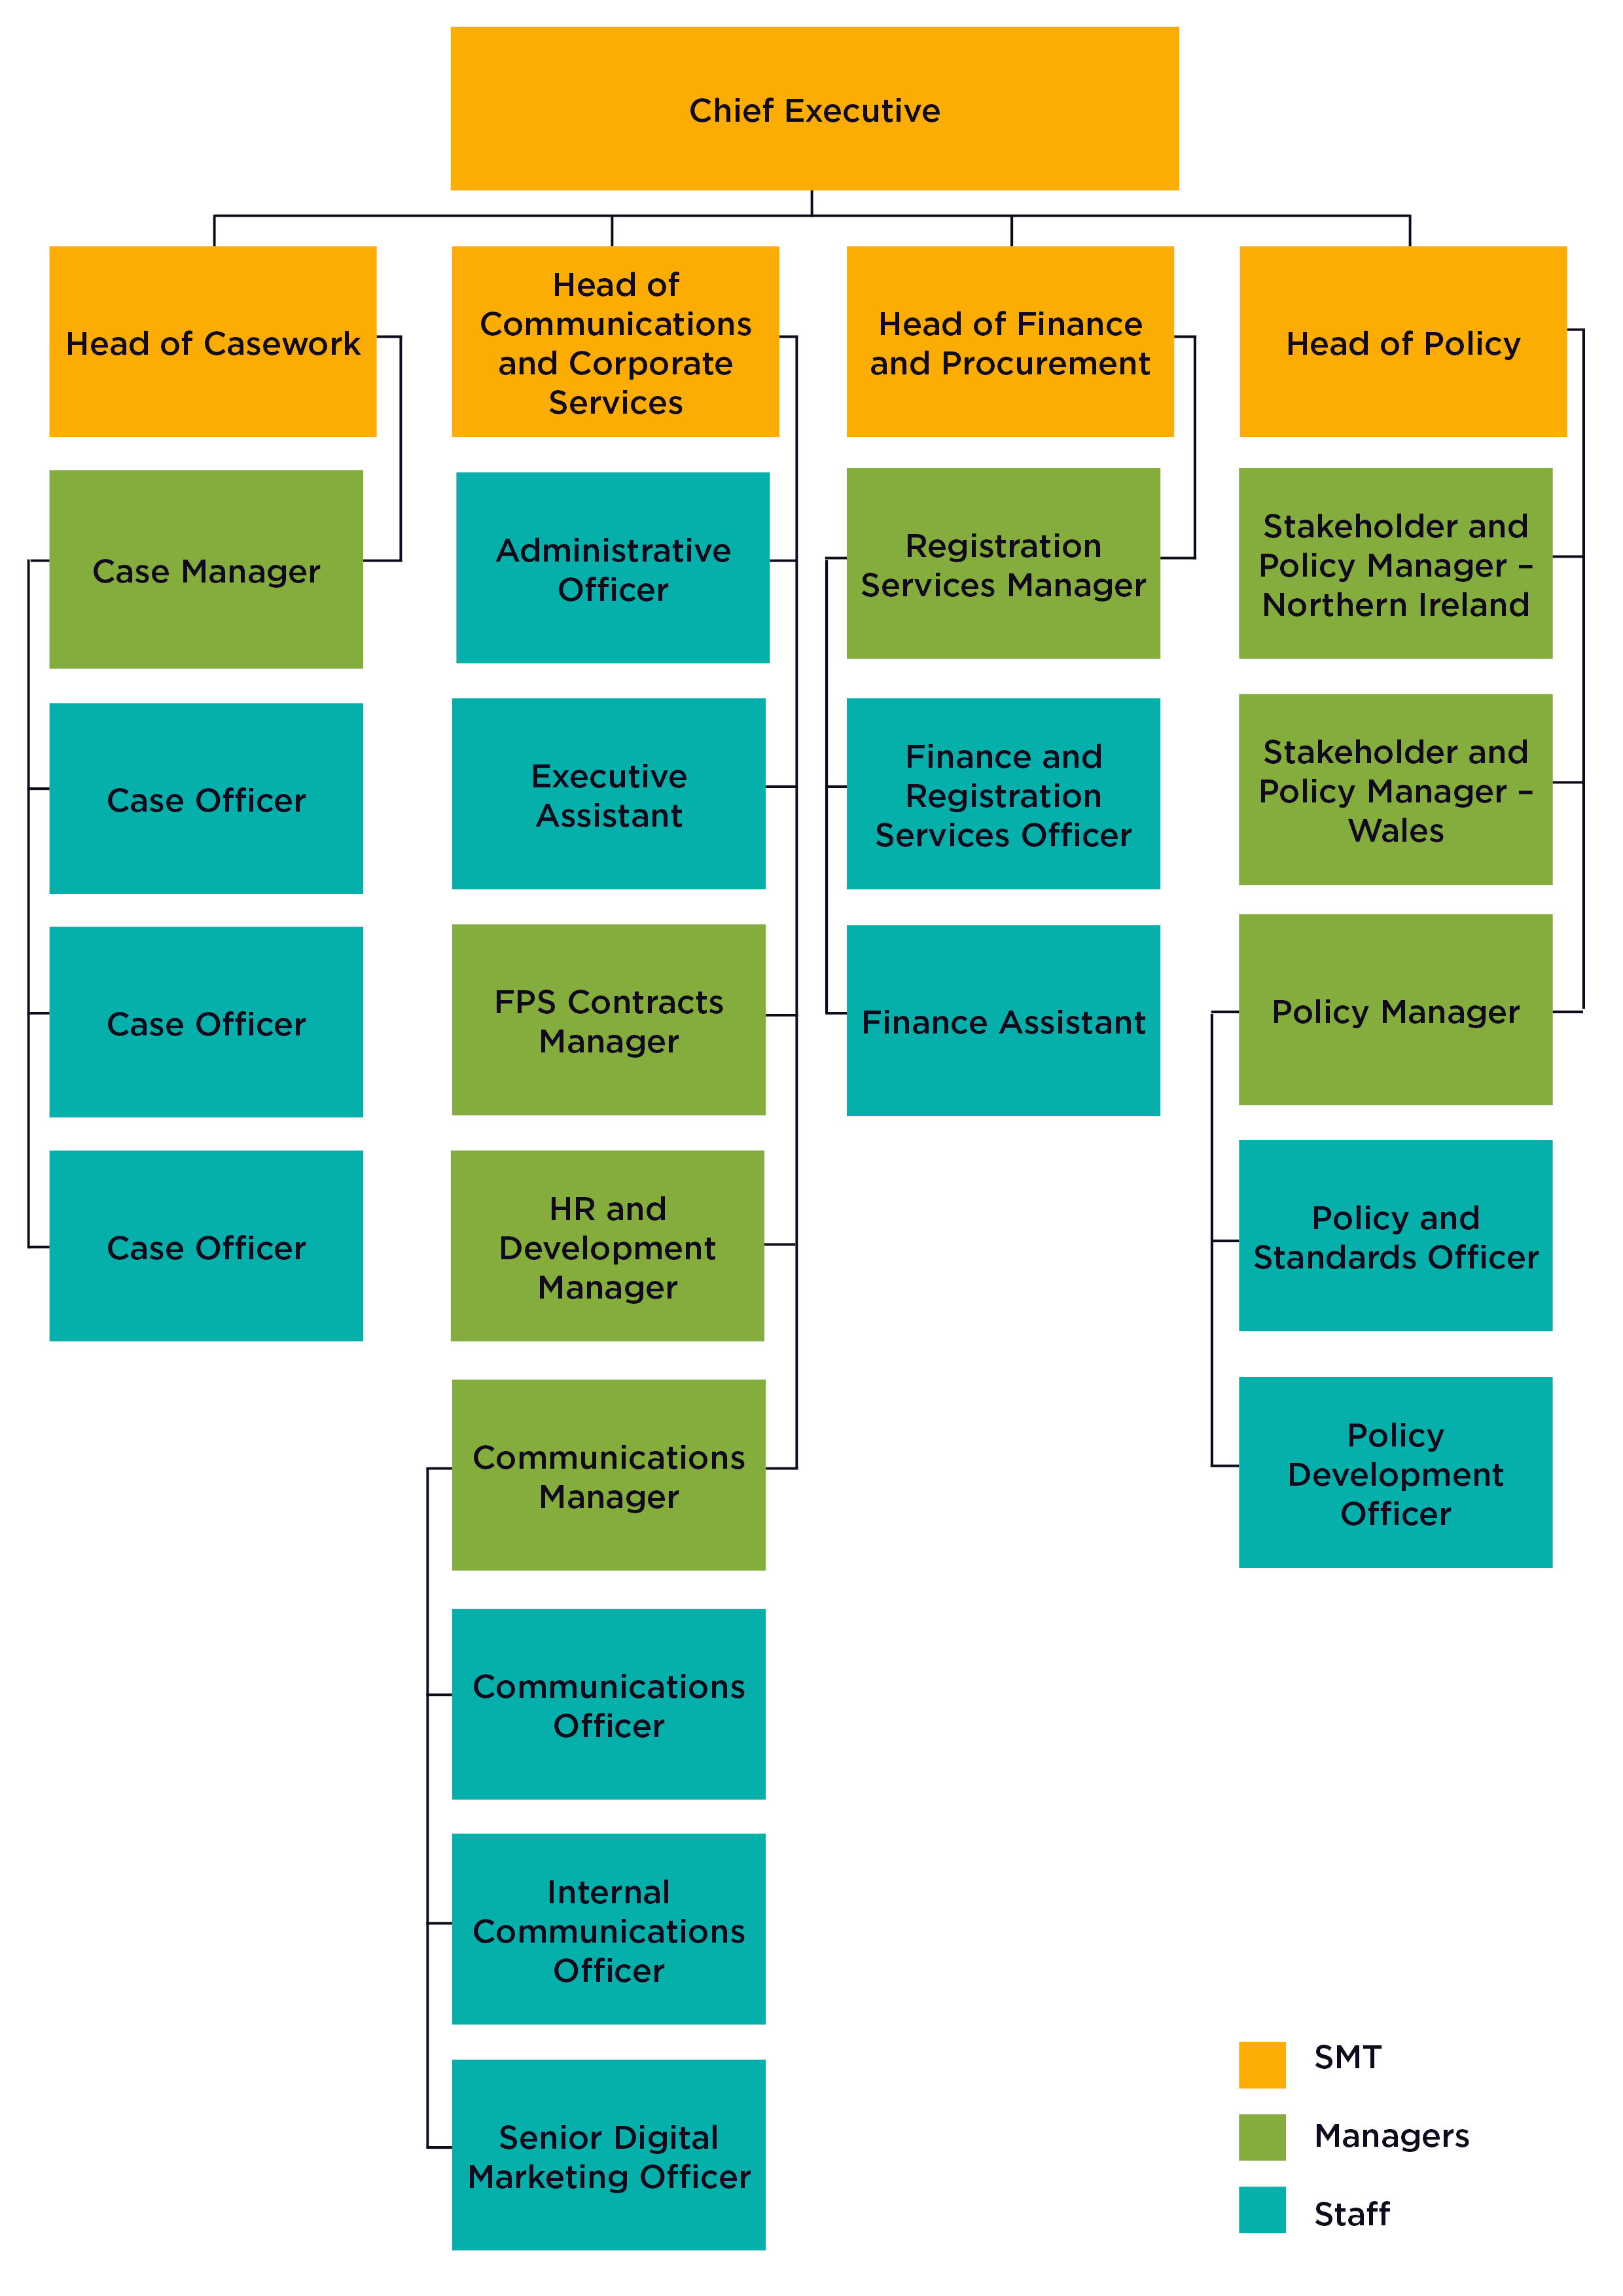 Image shows staff structure organogram